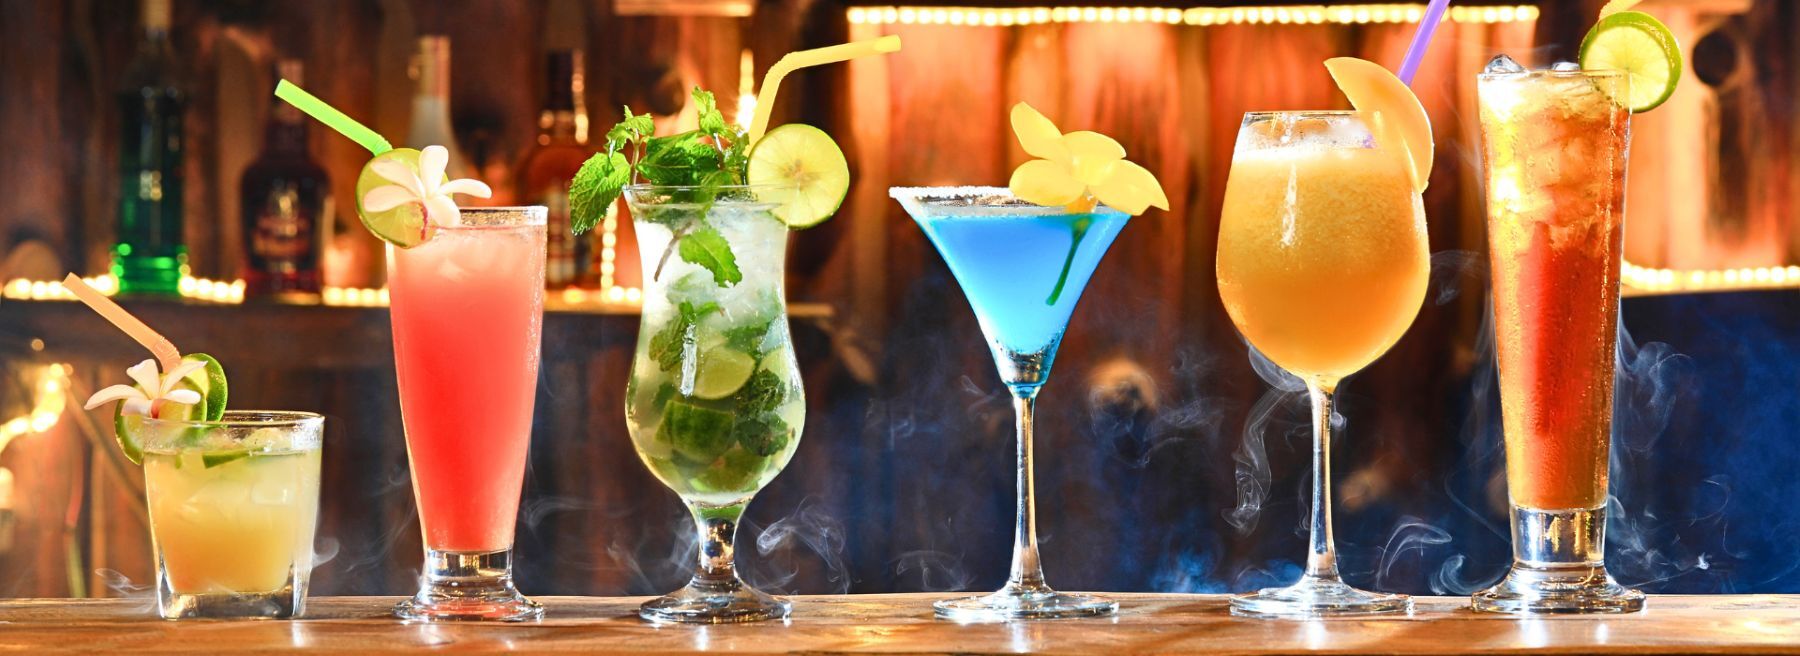 cocktails displayed on edge of bar